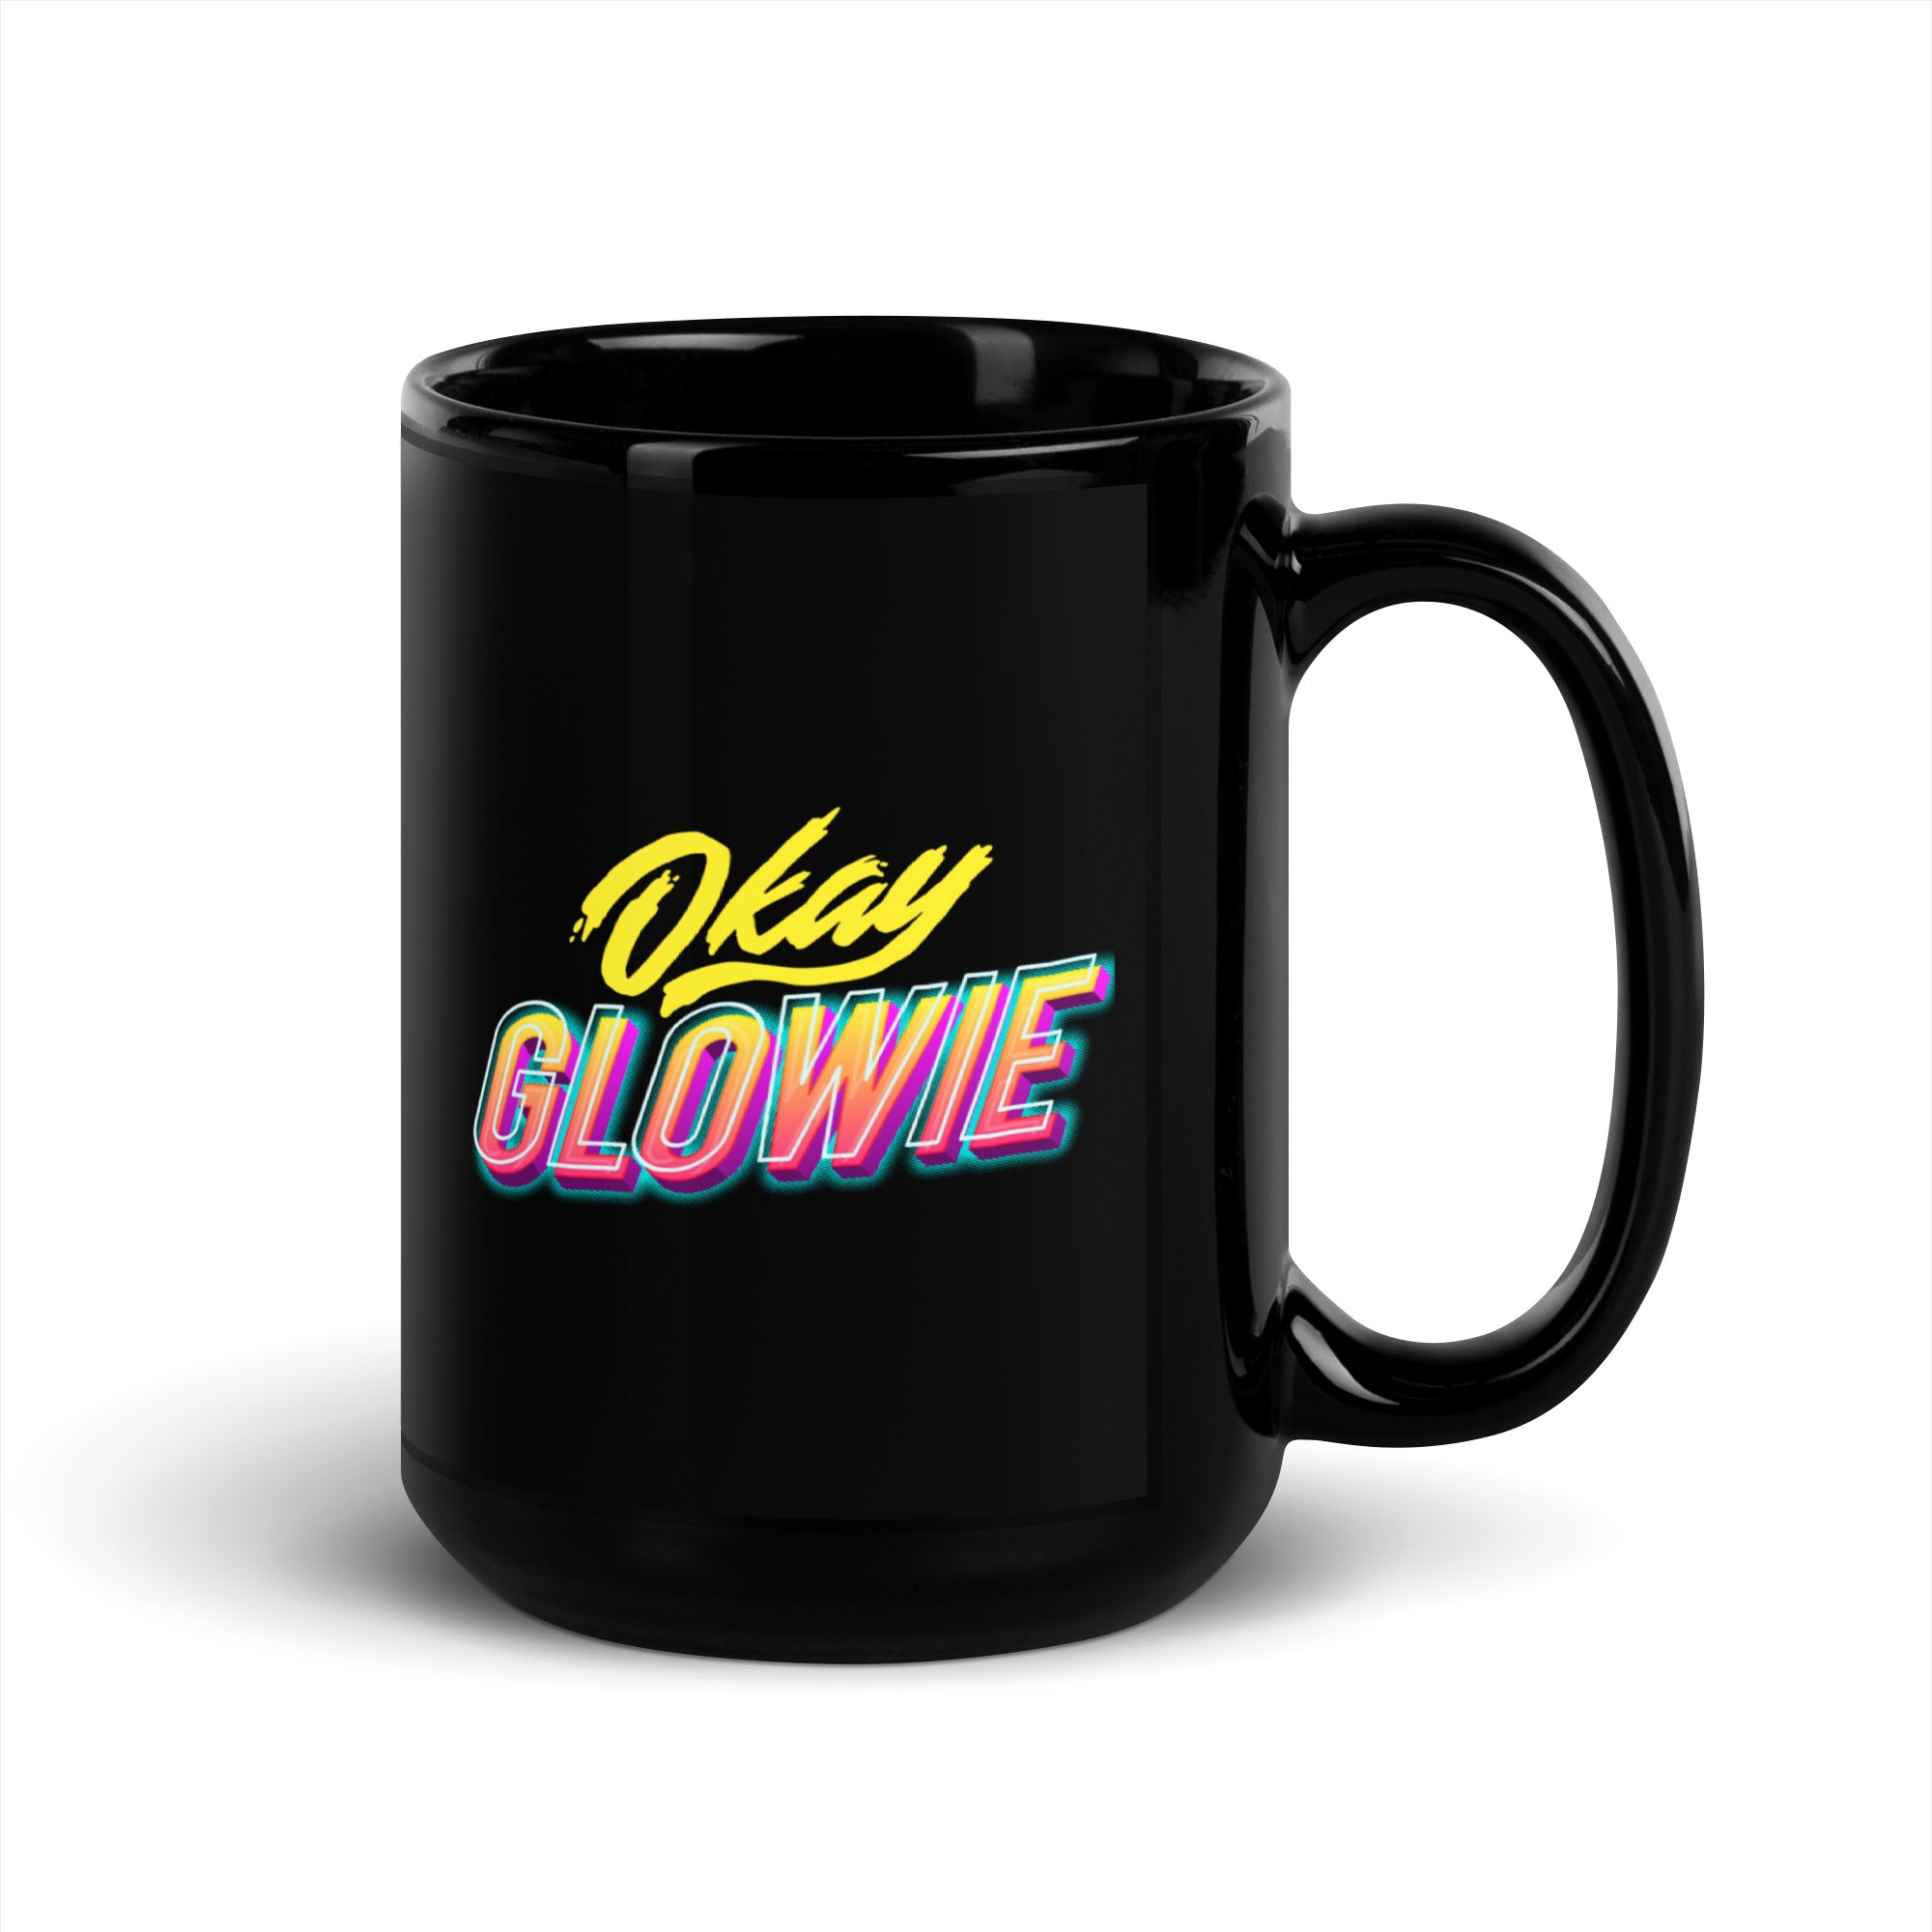 Okay Glowie Mug